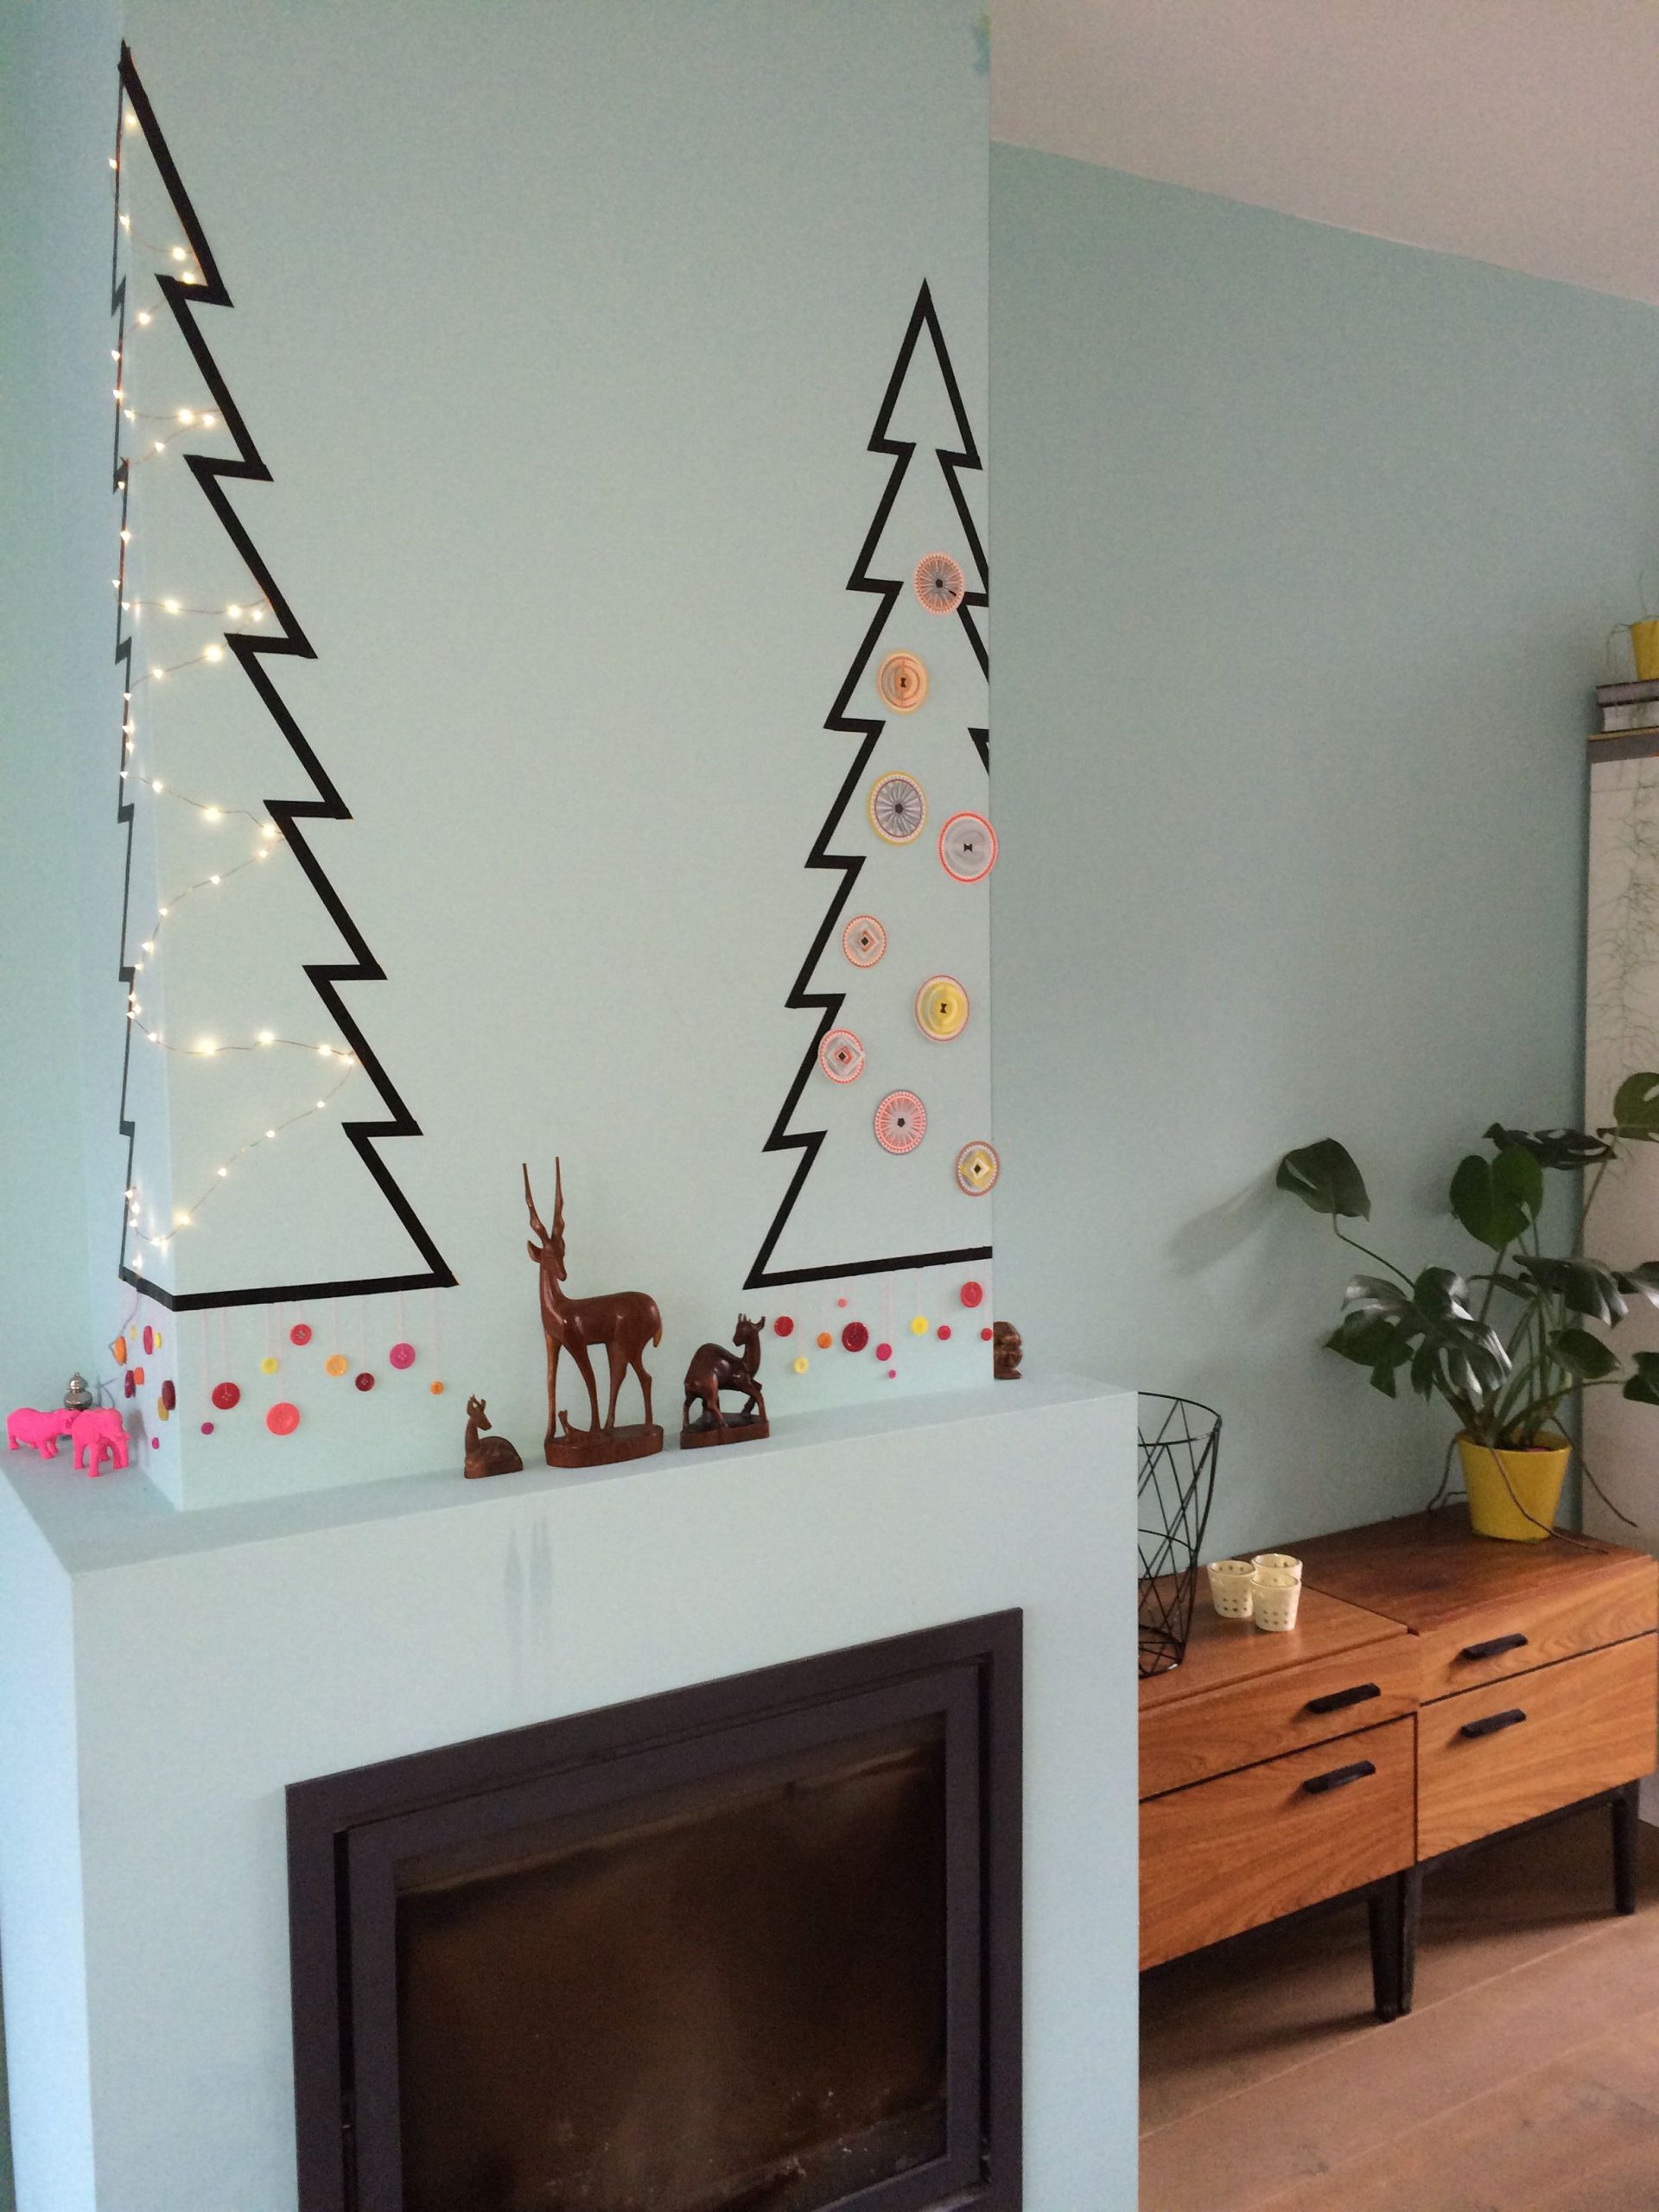 Washi Tape to Create a Christmas Tree Design